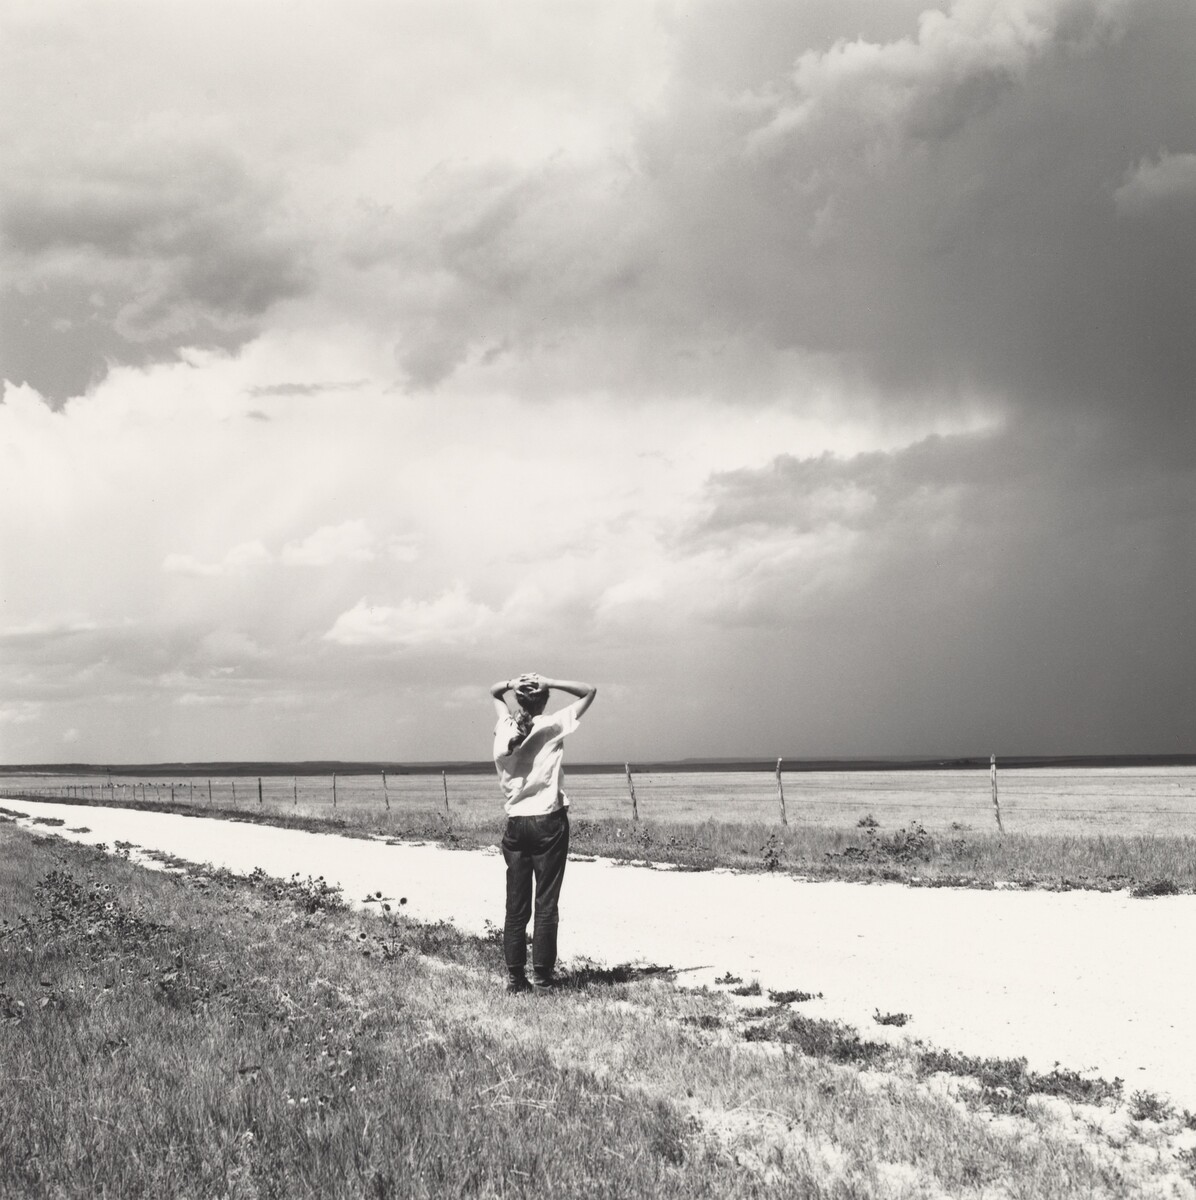 And for today’s  #MuseumMomentofZen, Robert Adams’s “Kerstin enjoying the wind. East of Keota, Colorado” (1969, printed c. 1977).